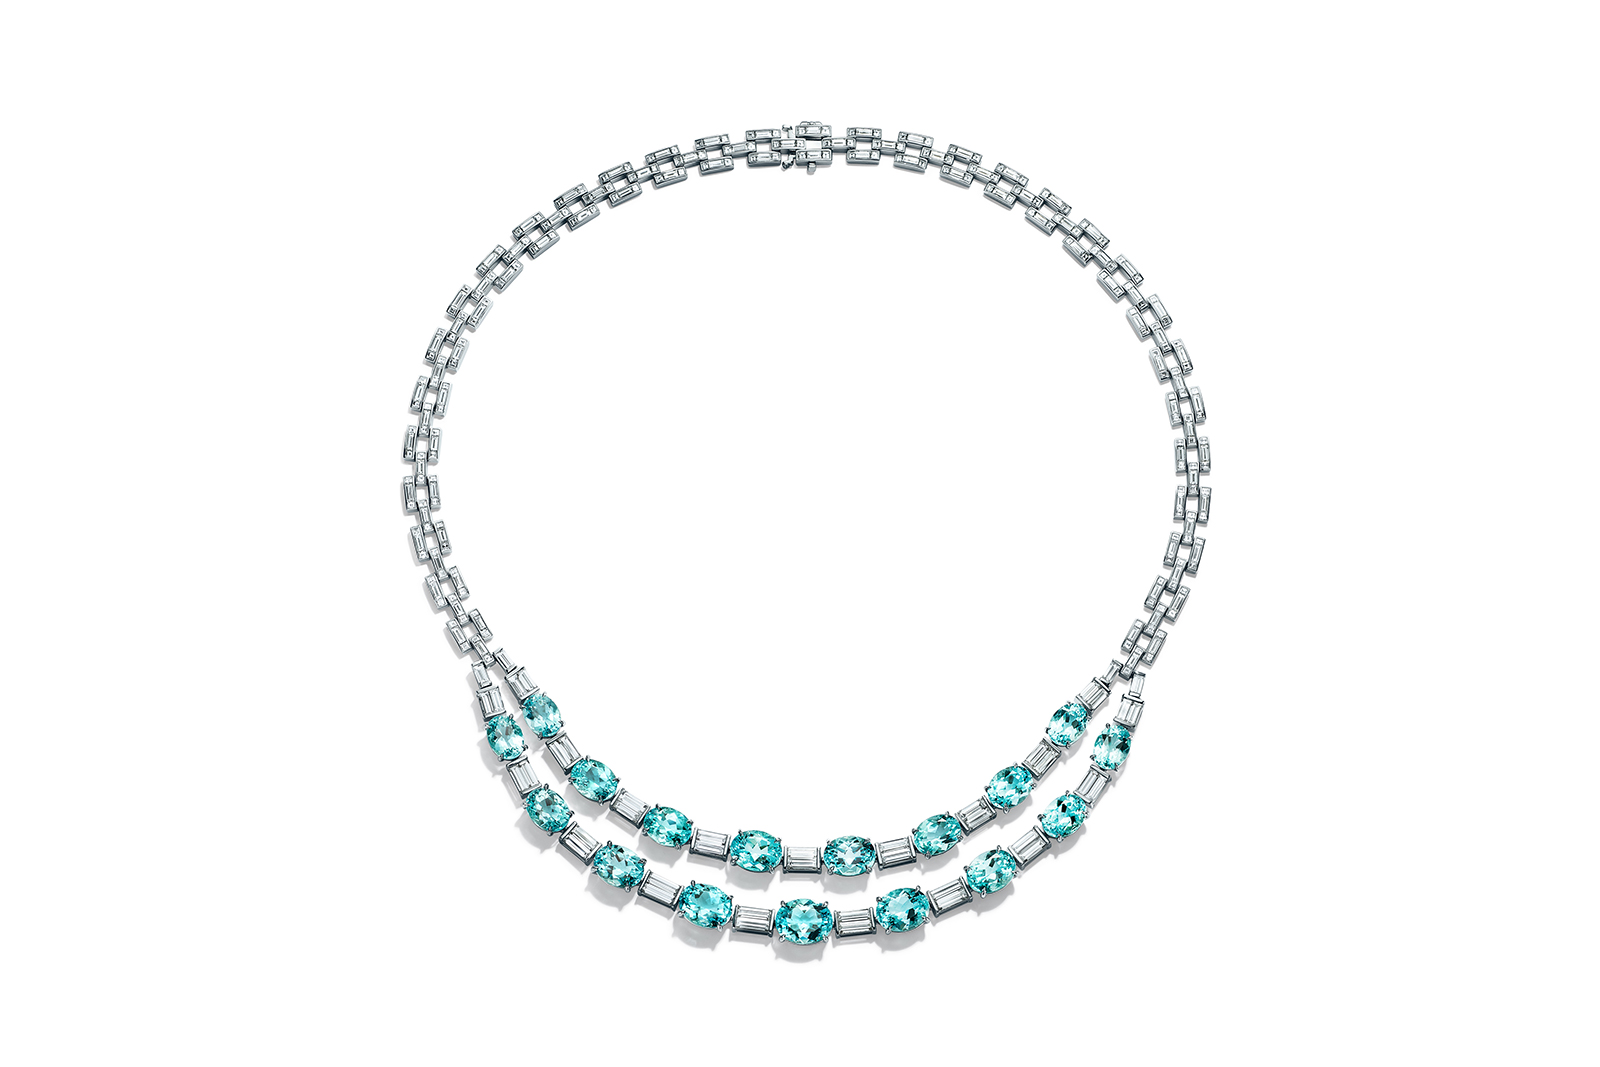 blue diamond necklace tiffany